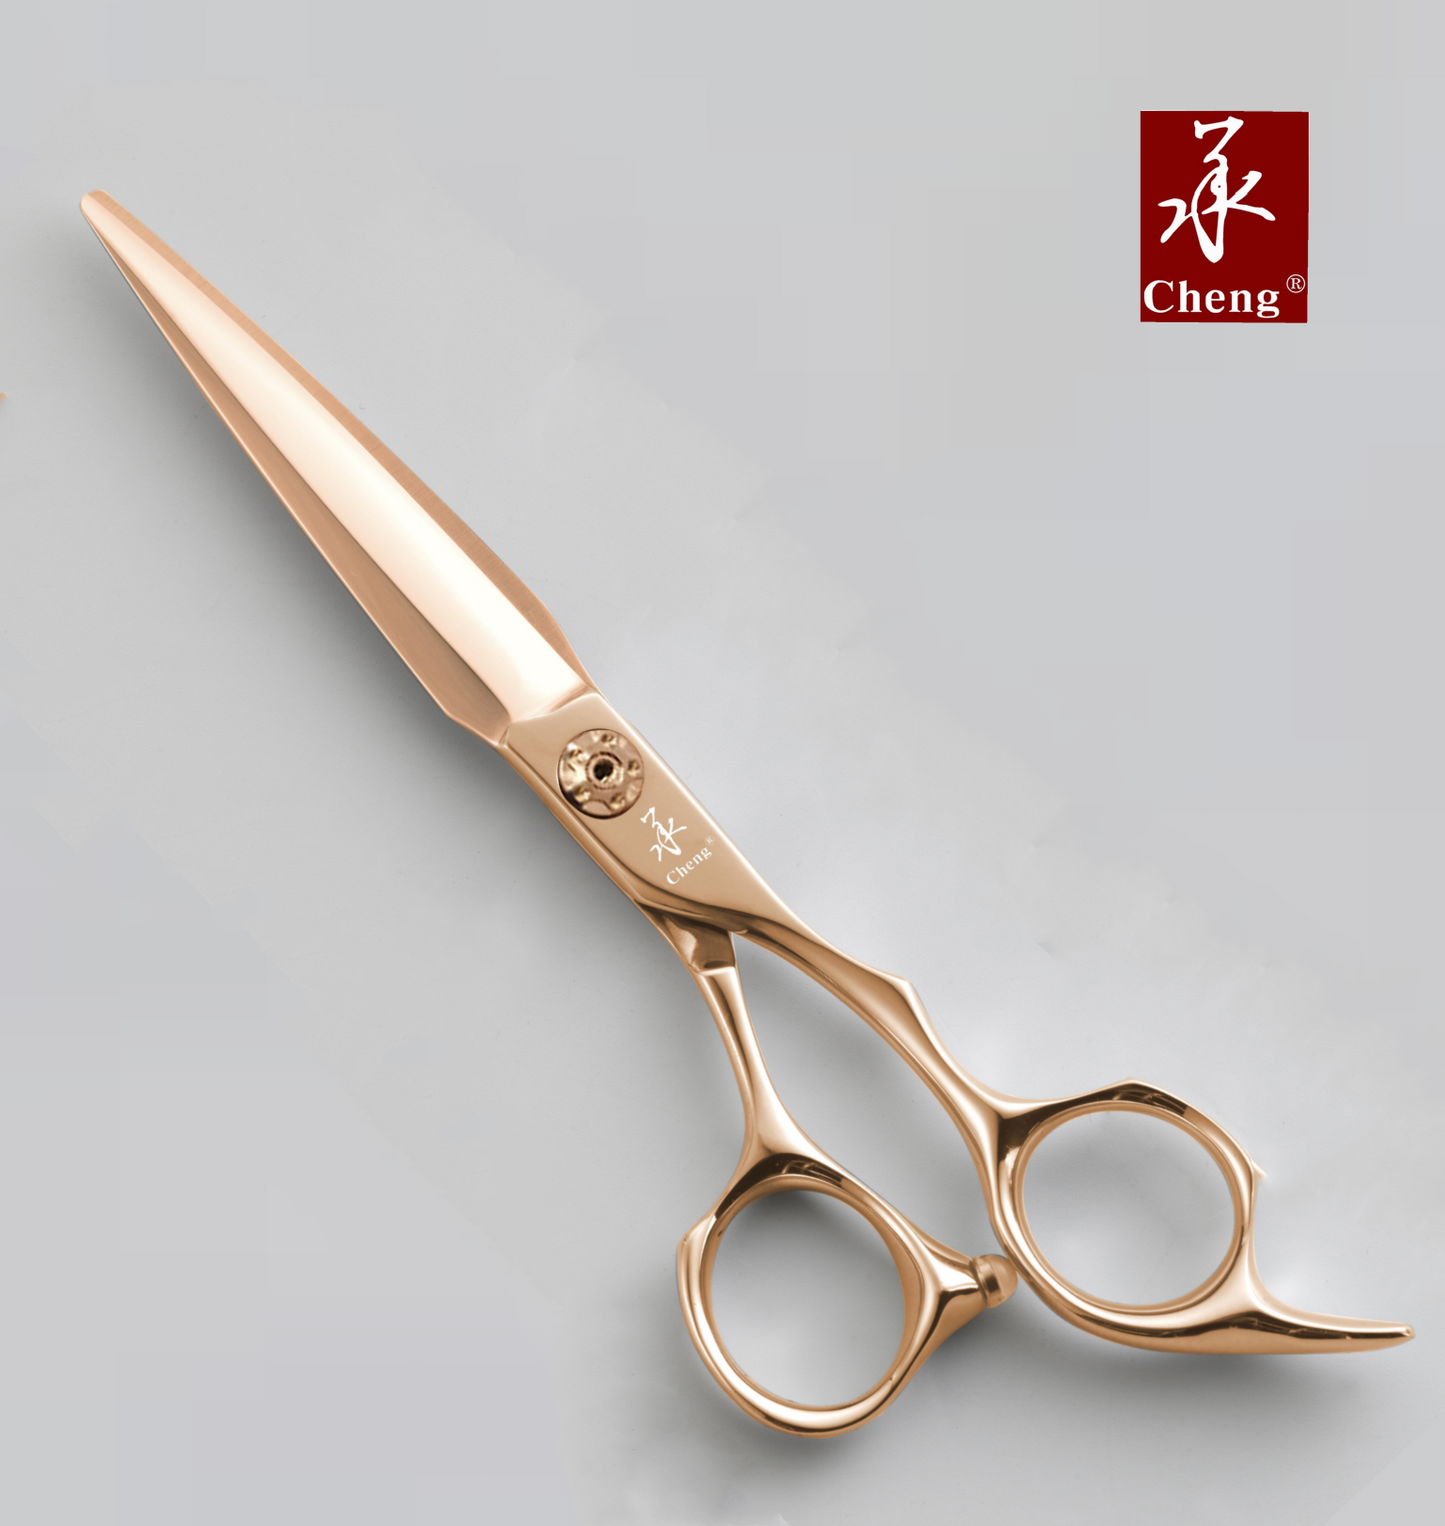 A1-6.8BK Hair  Cutting Scissors 6.8 Inch